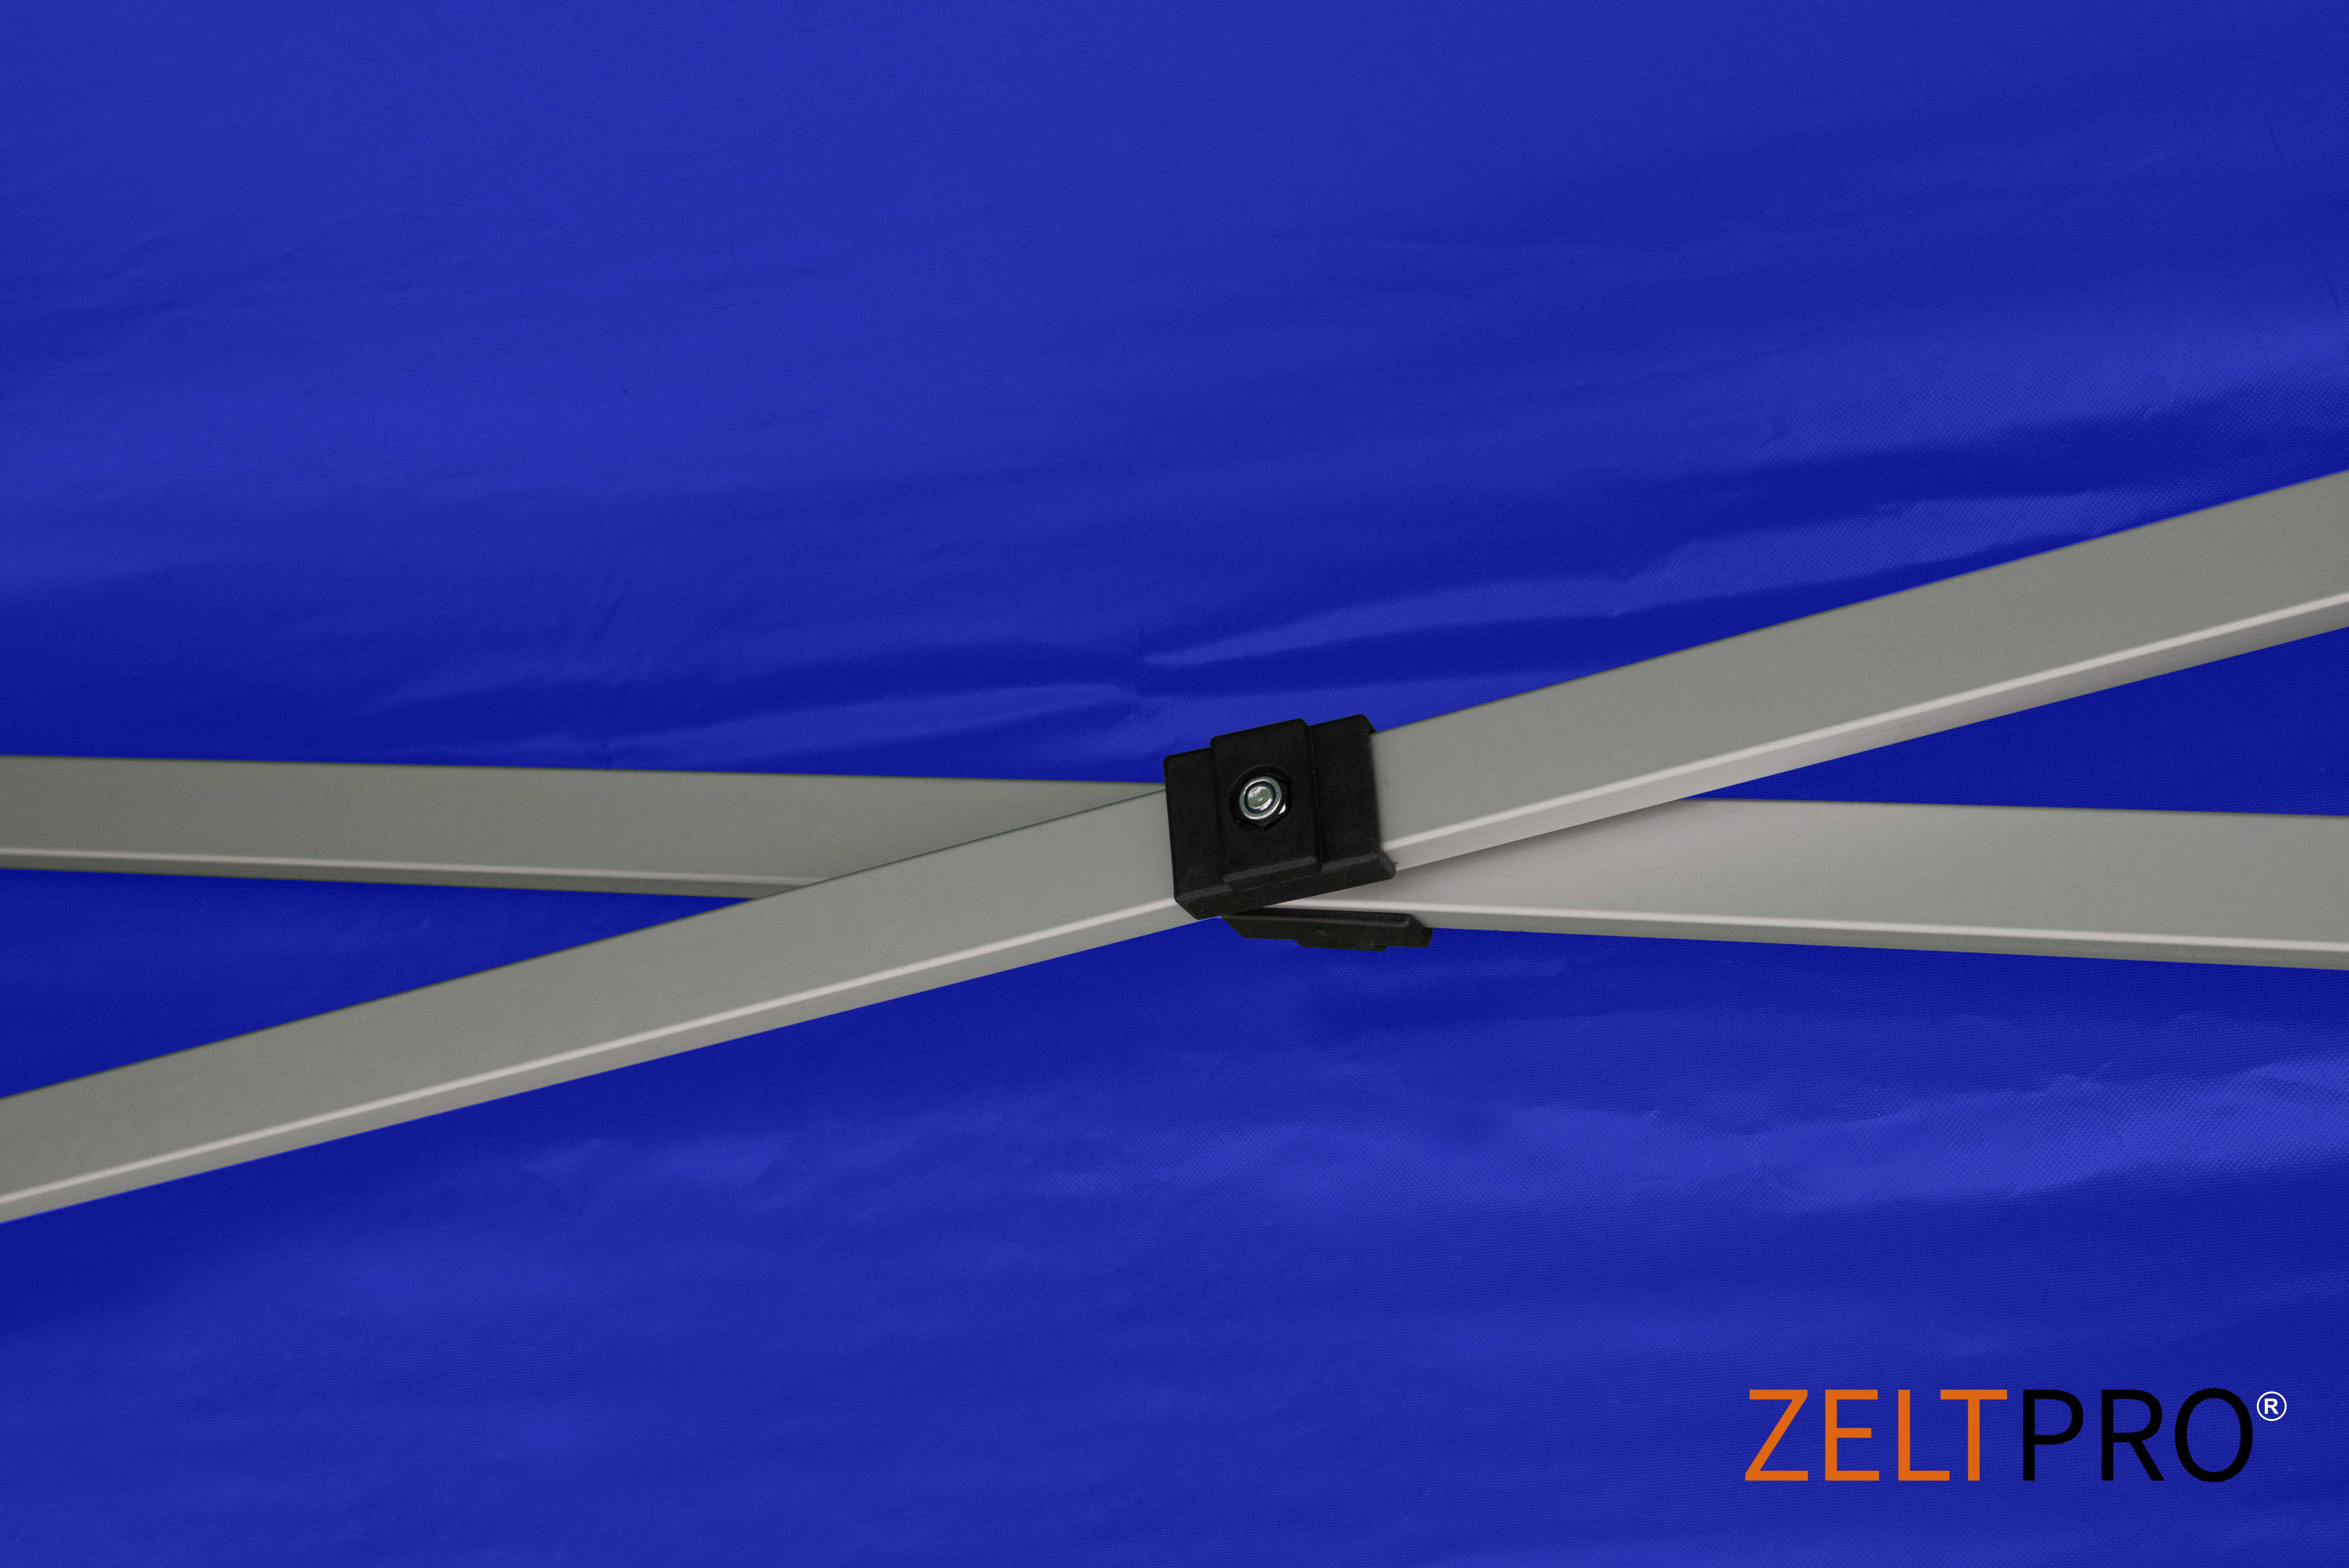 Prekybinė Palapinė 3x6 Mėlyna Zeltpro TITAN